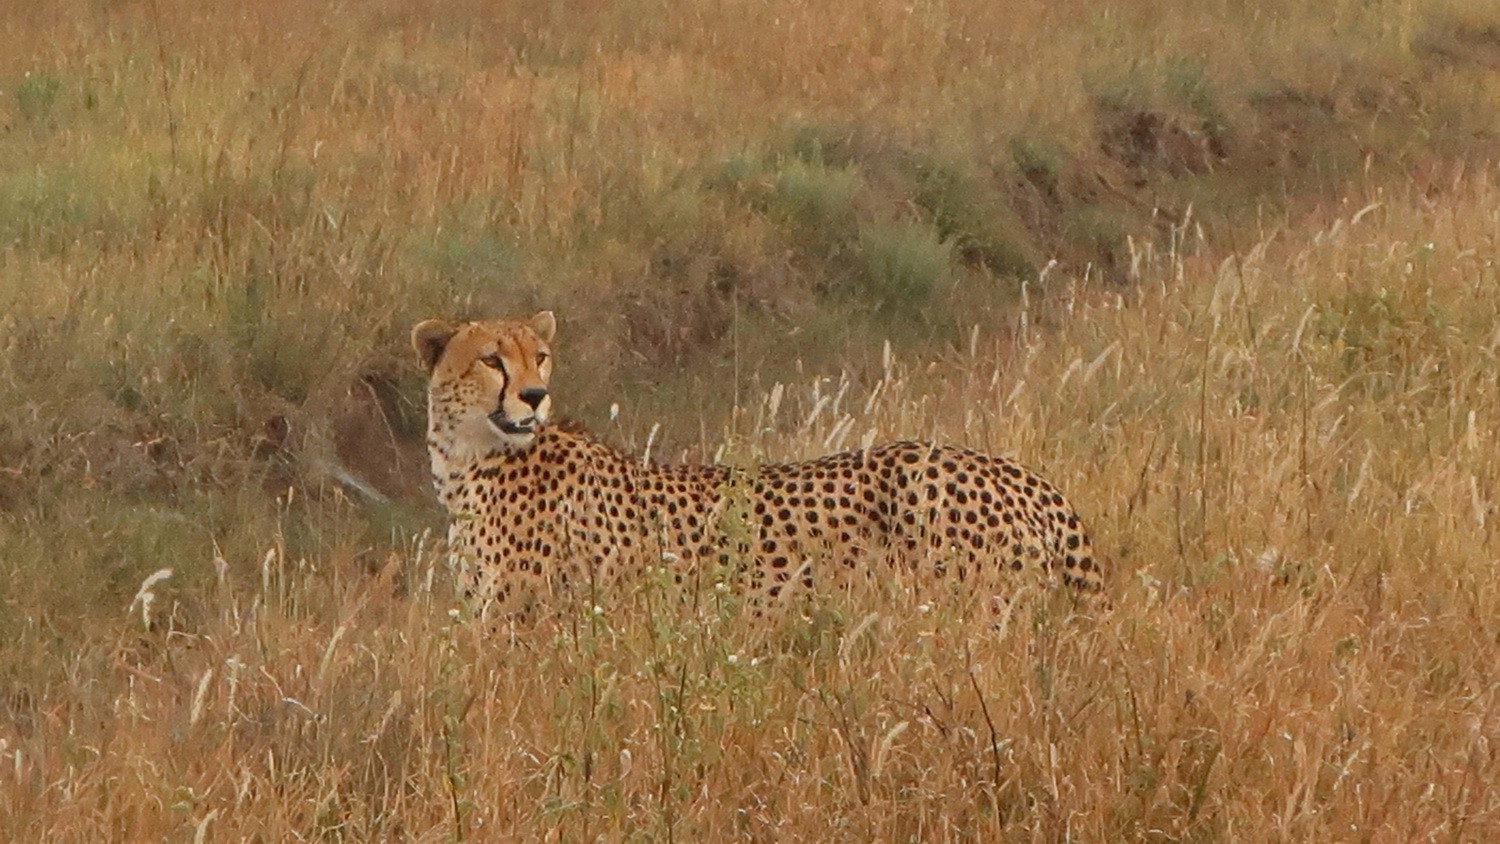 Watching Cheetah